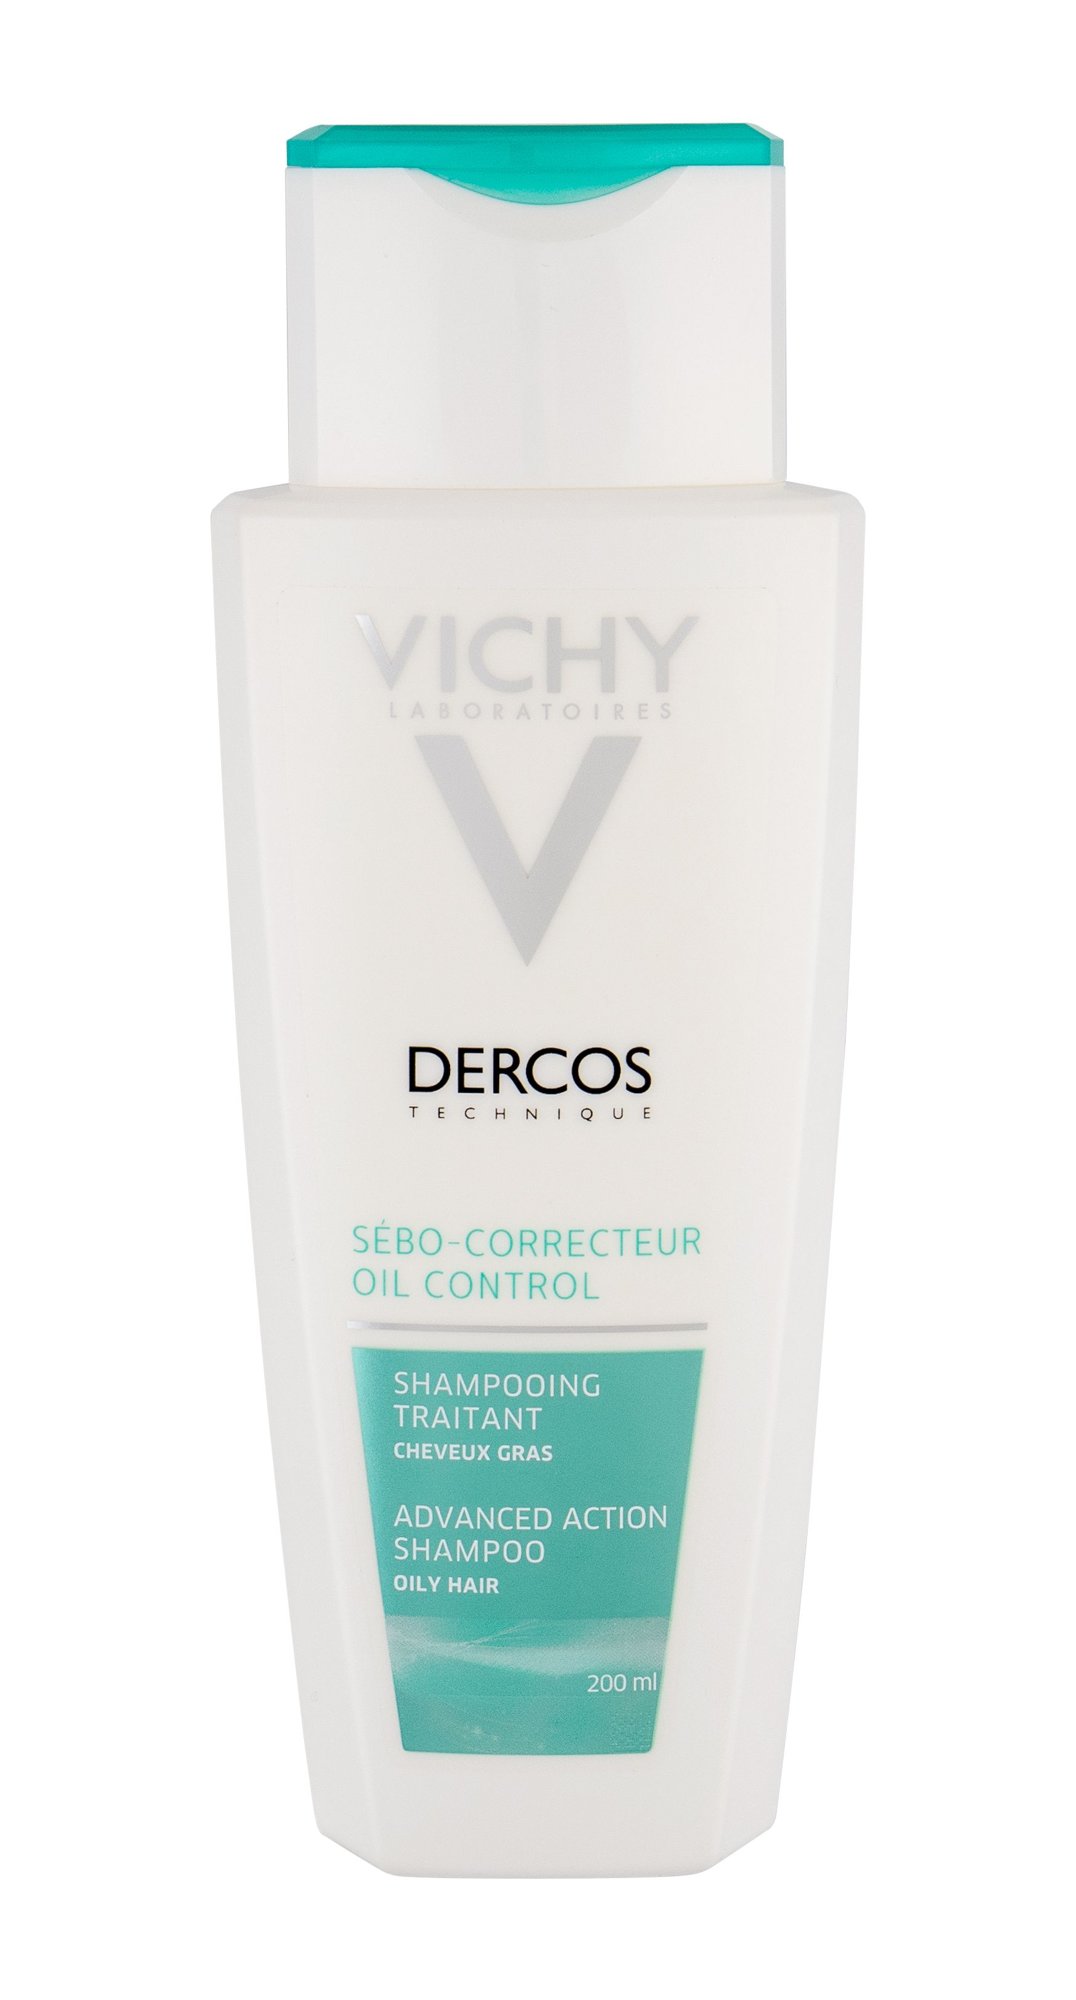 Vichy Dercos Technique Shampoo